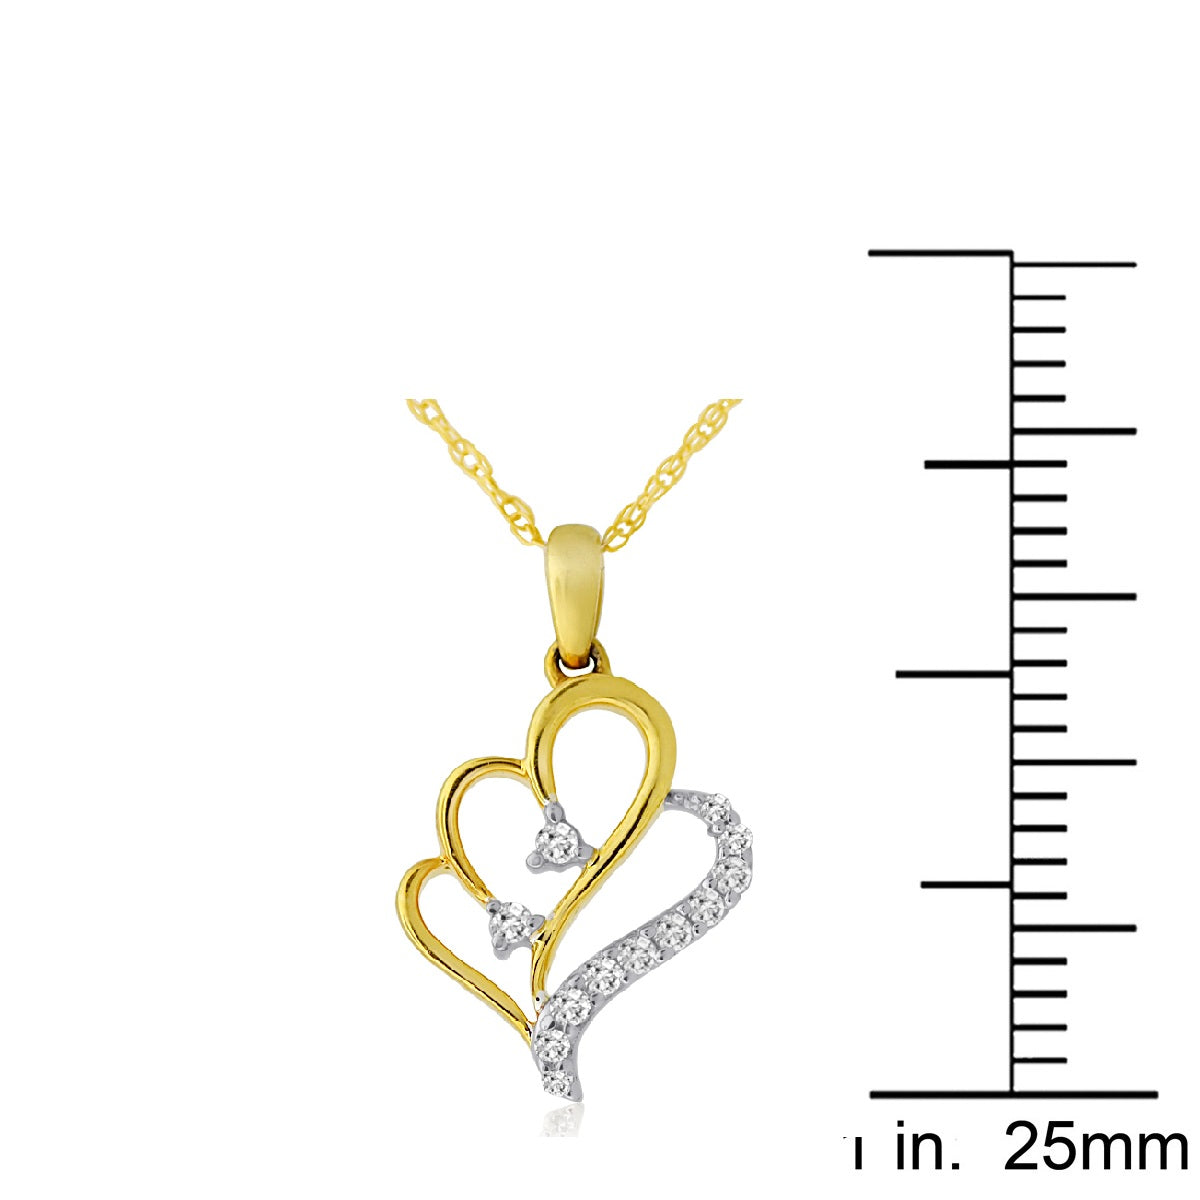 10k Two-Tone Gold 0.10 ct TDW White Diamond Scalloped Double Heart Necklace